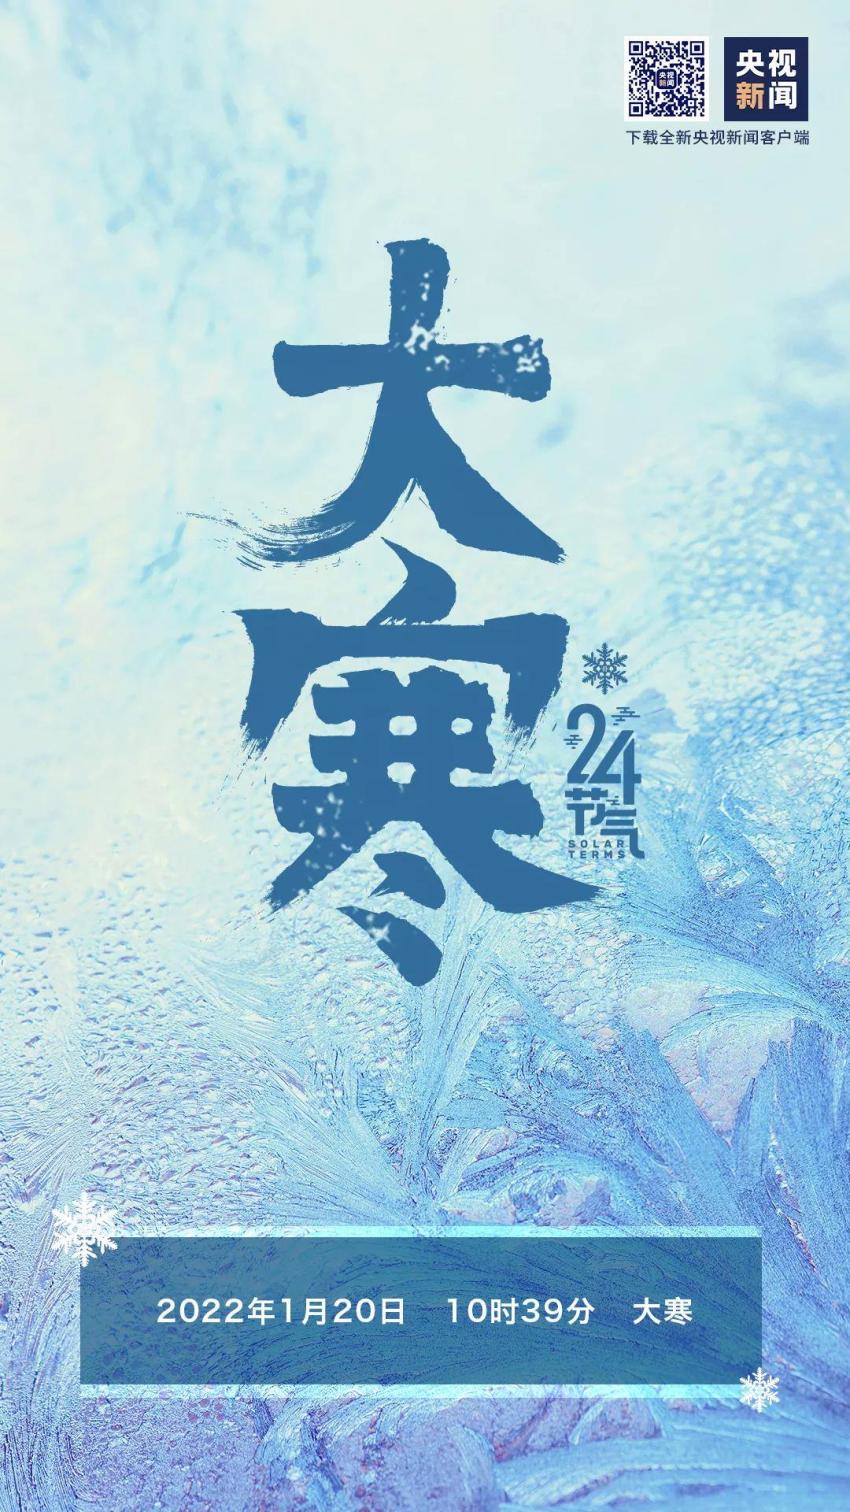 Mari Sambut Bersama Salju Pertama Beijing di Tahun 2022